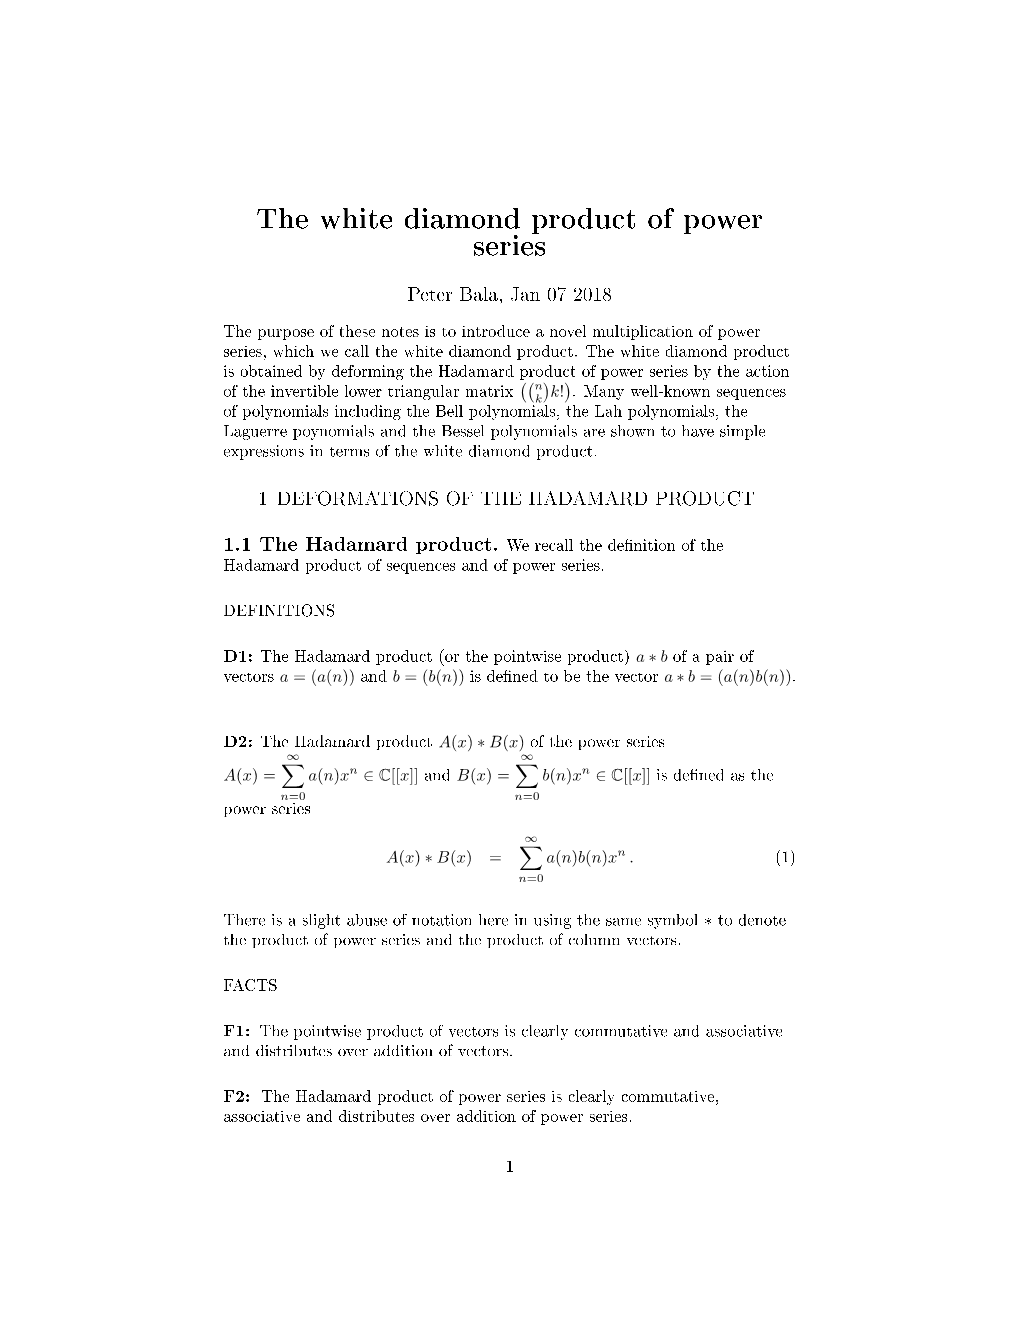 The White Diamond Product of Power Series